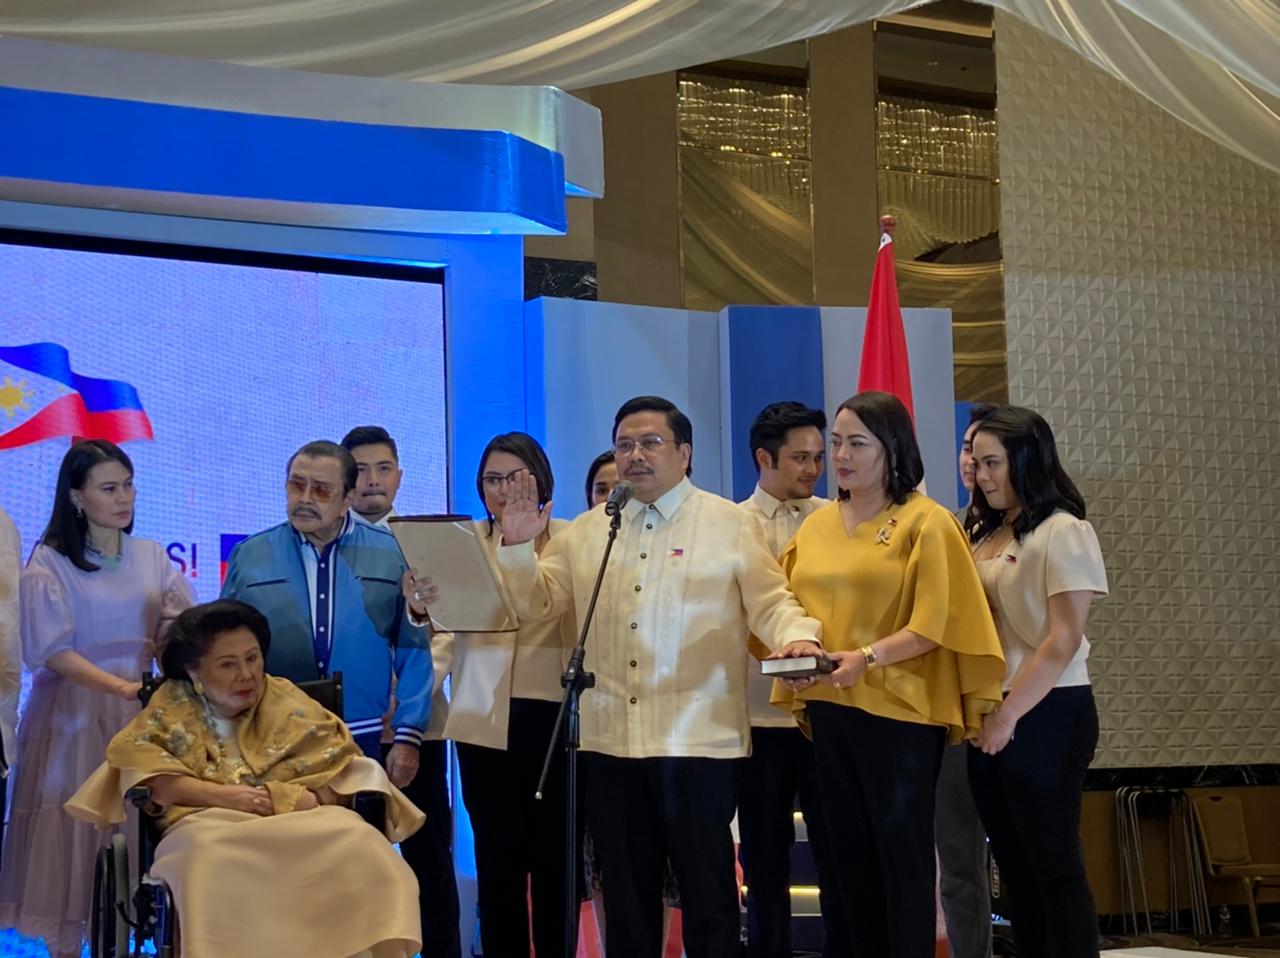 Returning senator Jinggoy Estrada took his oath of office on Tuesday evening. Justice Gaerlan administered Estrada's oath in Parañaque City.